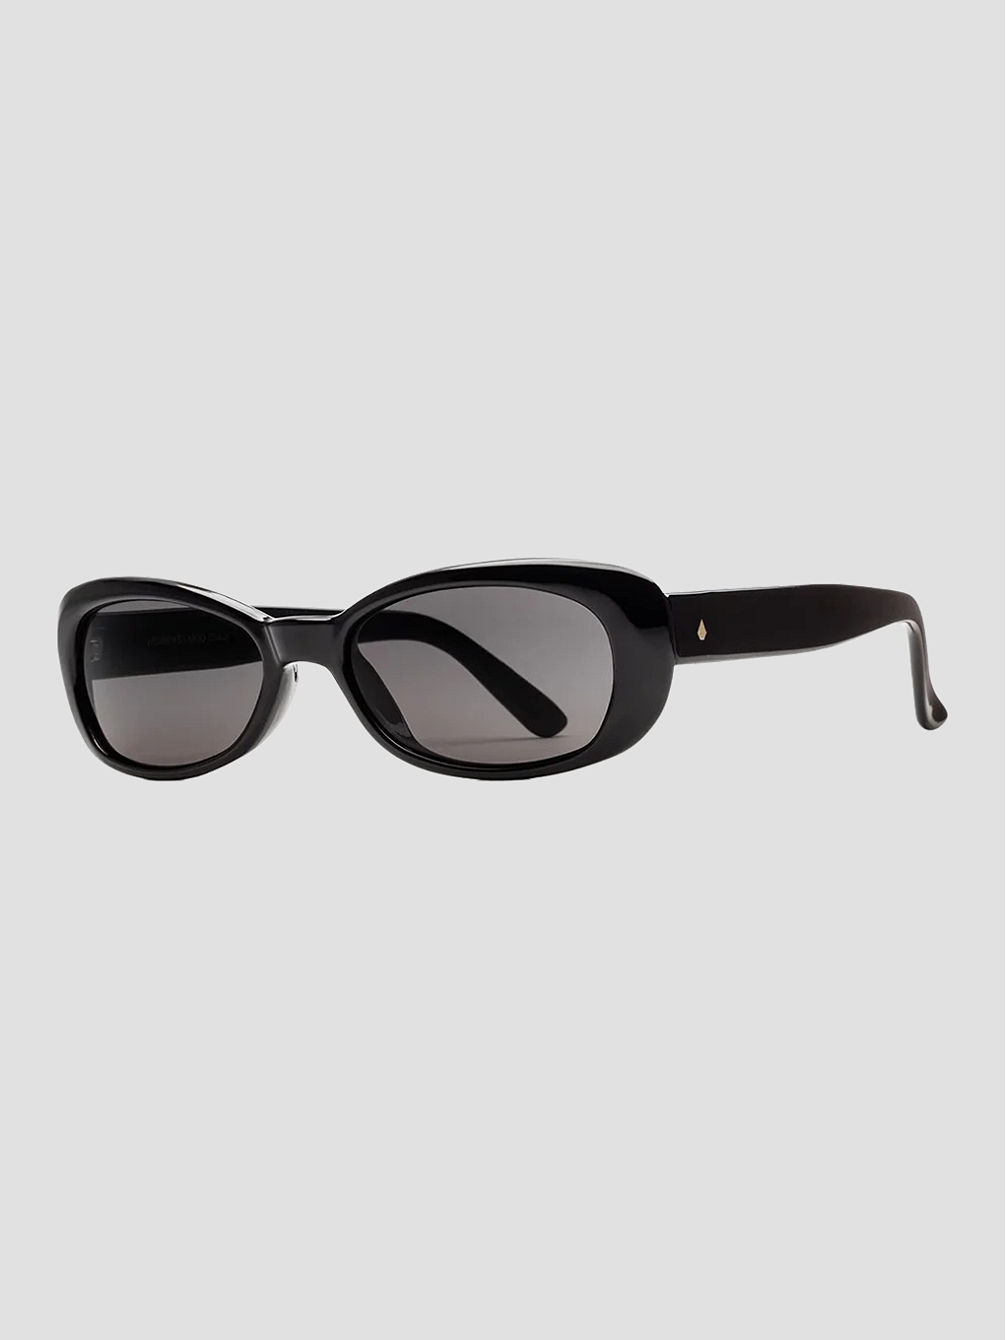 Jam Gloss Black Sunglasses